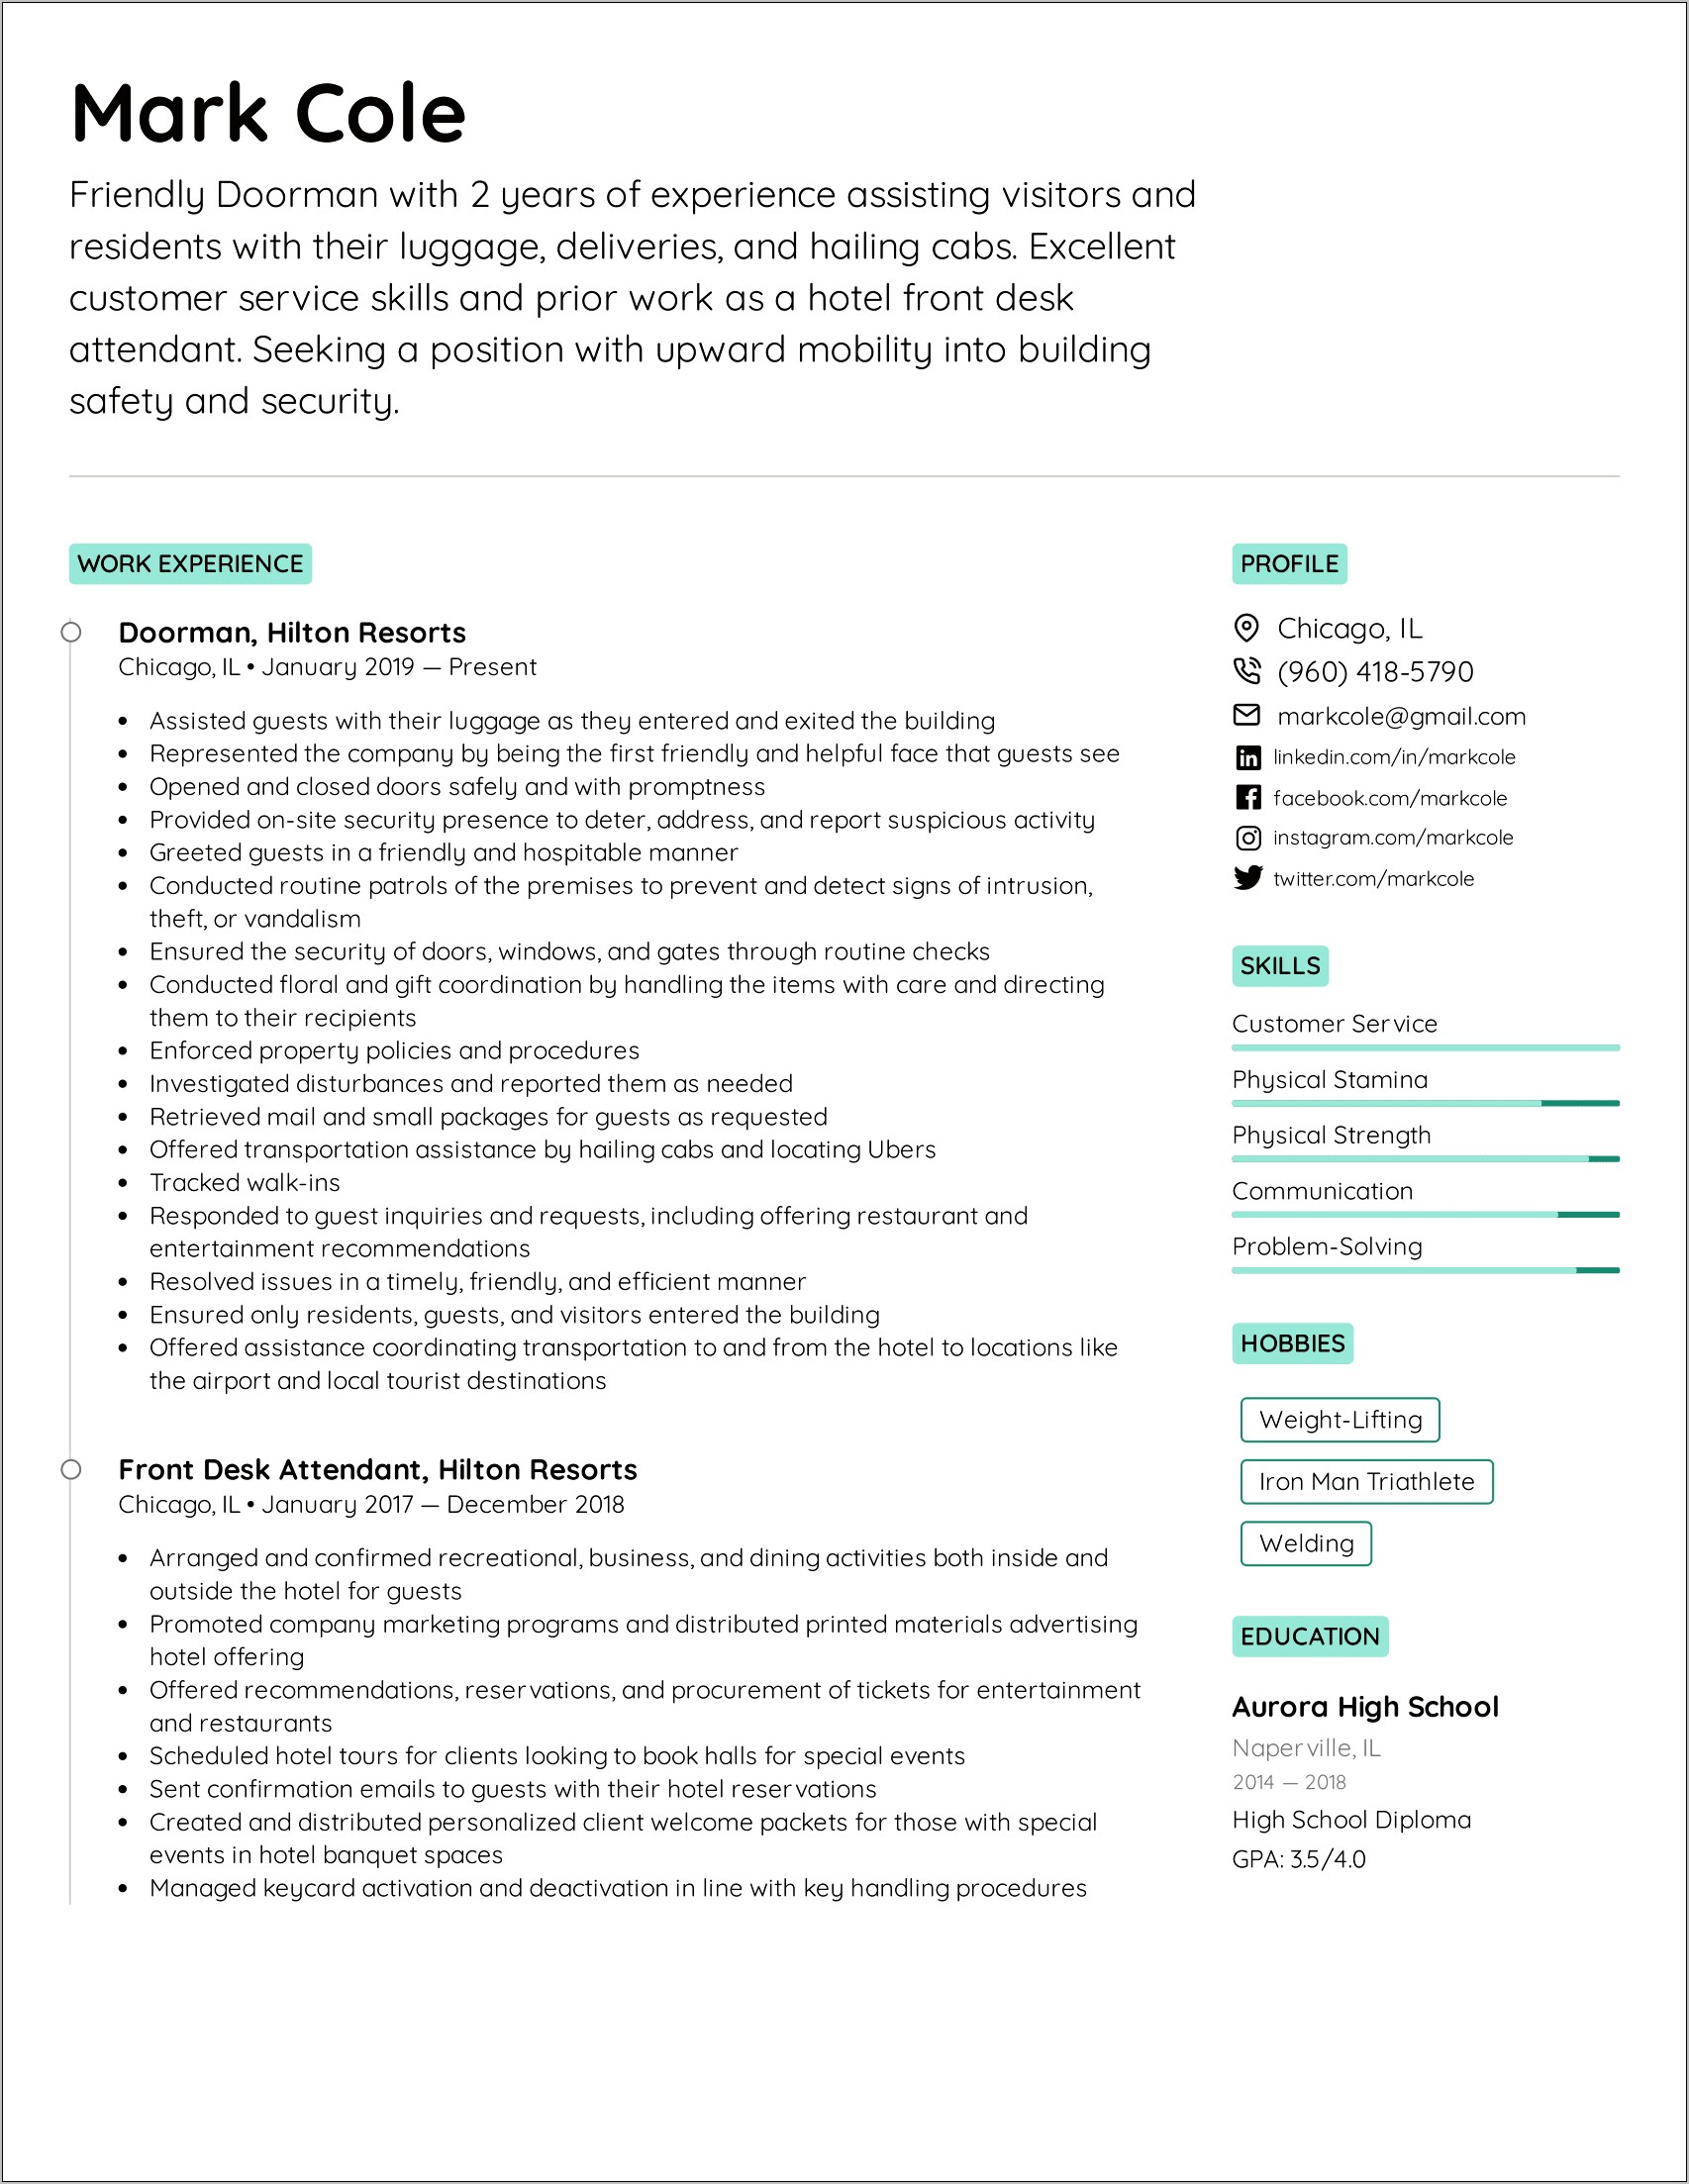 Resume Description For Service Desk Attendant